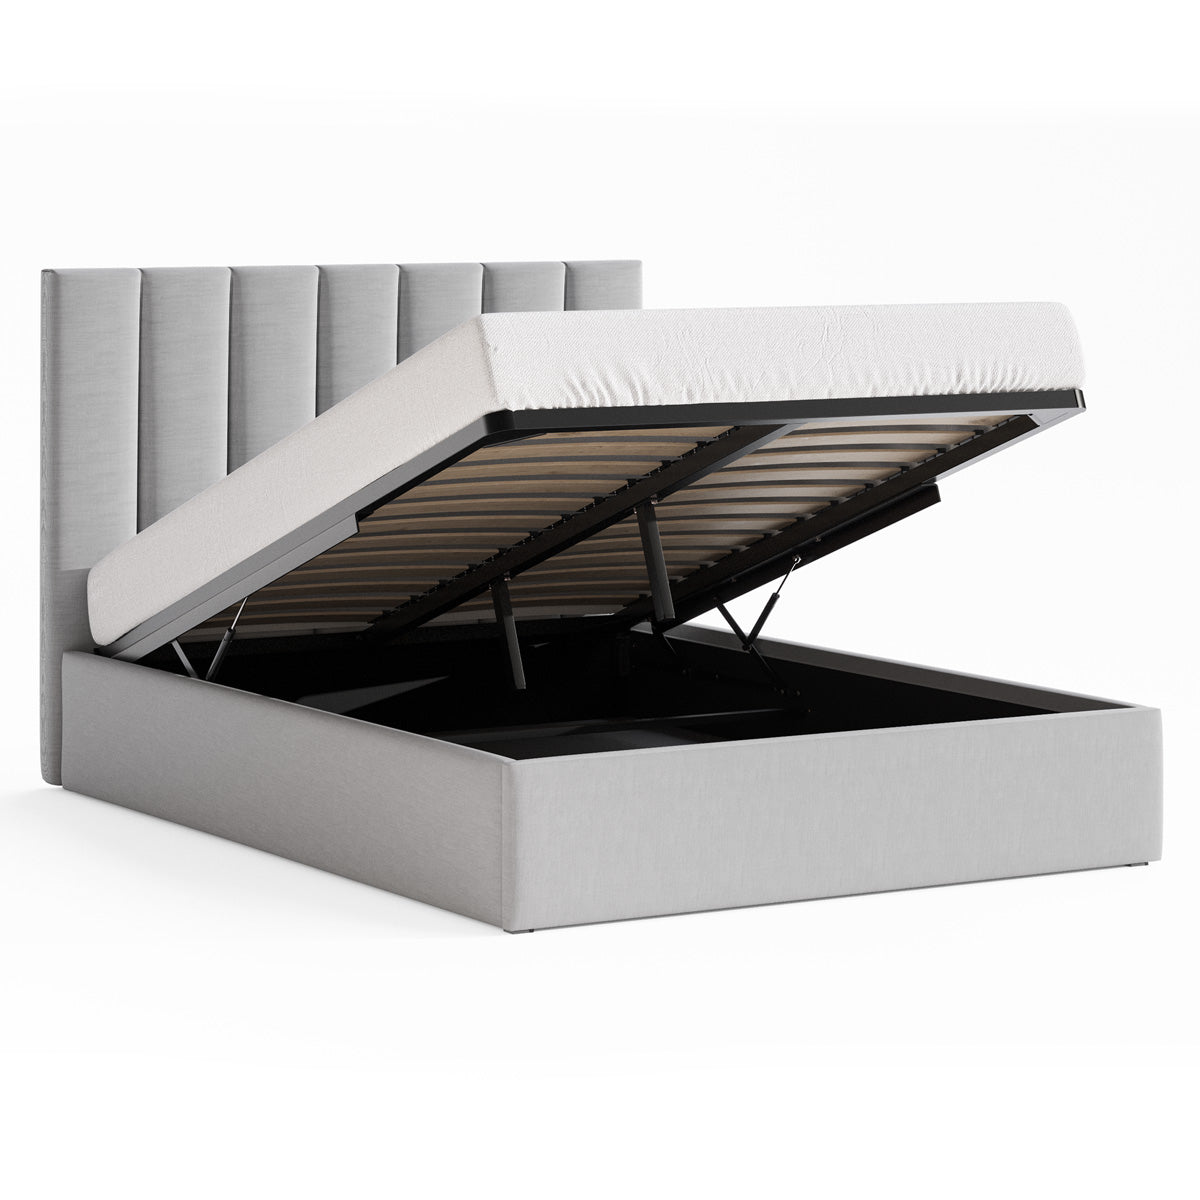 Celine Gas Lift Storage Bed Frame (Grey Fabric)